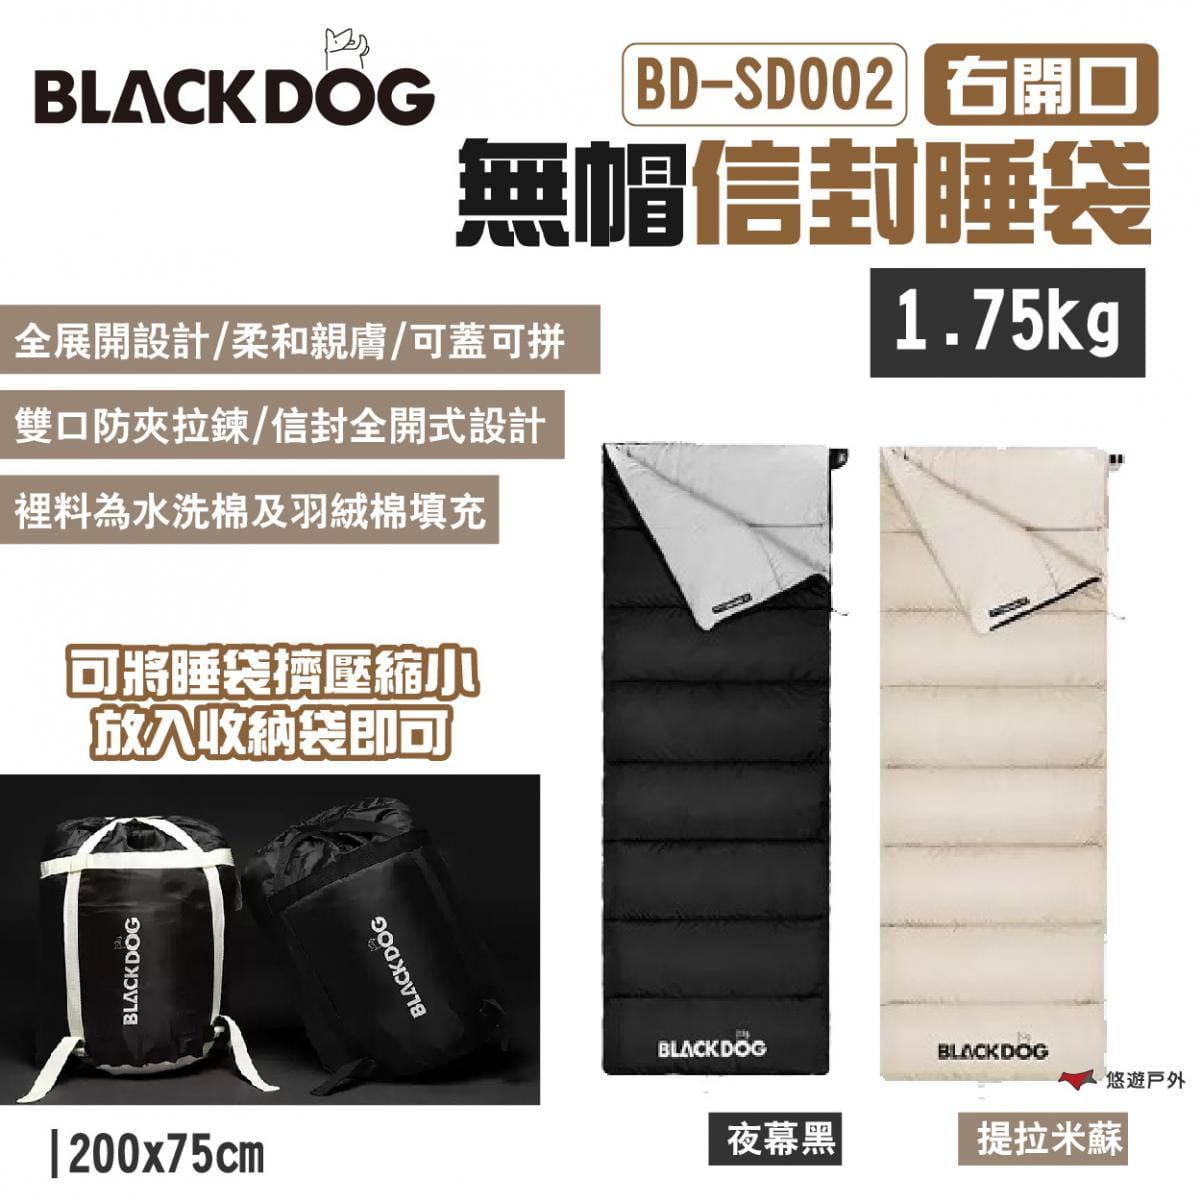 【BLACKDOG】無帽信封睡袋 右開口 1.75kg BD-SD002 悠遊戶外 1